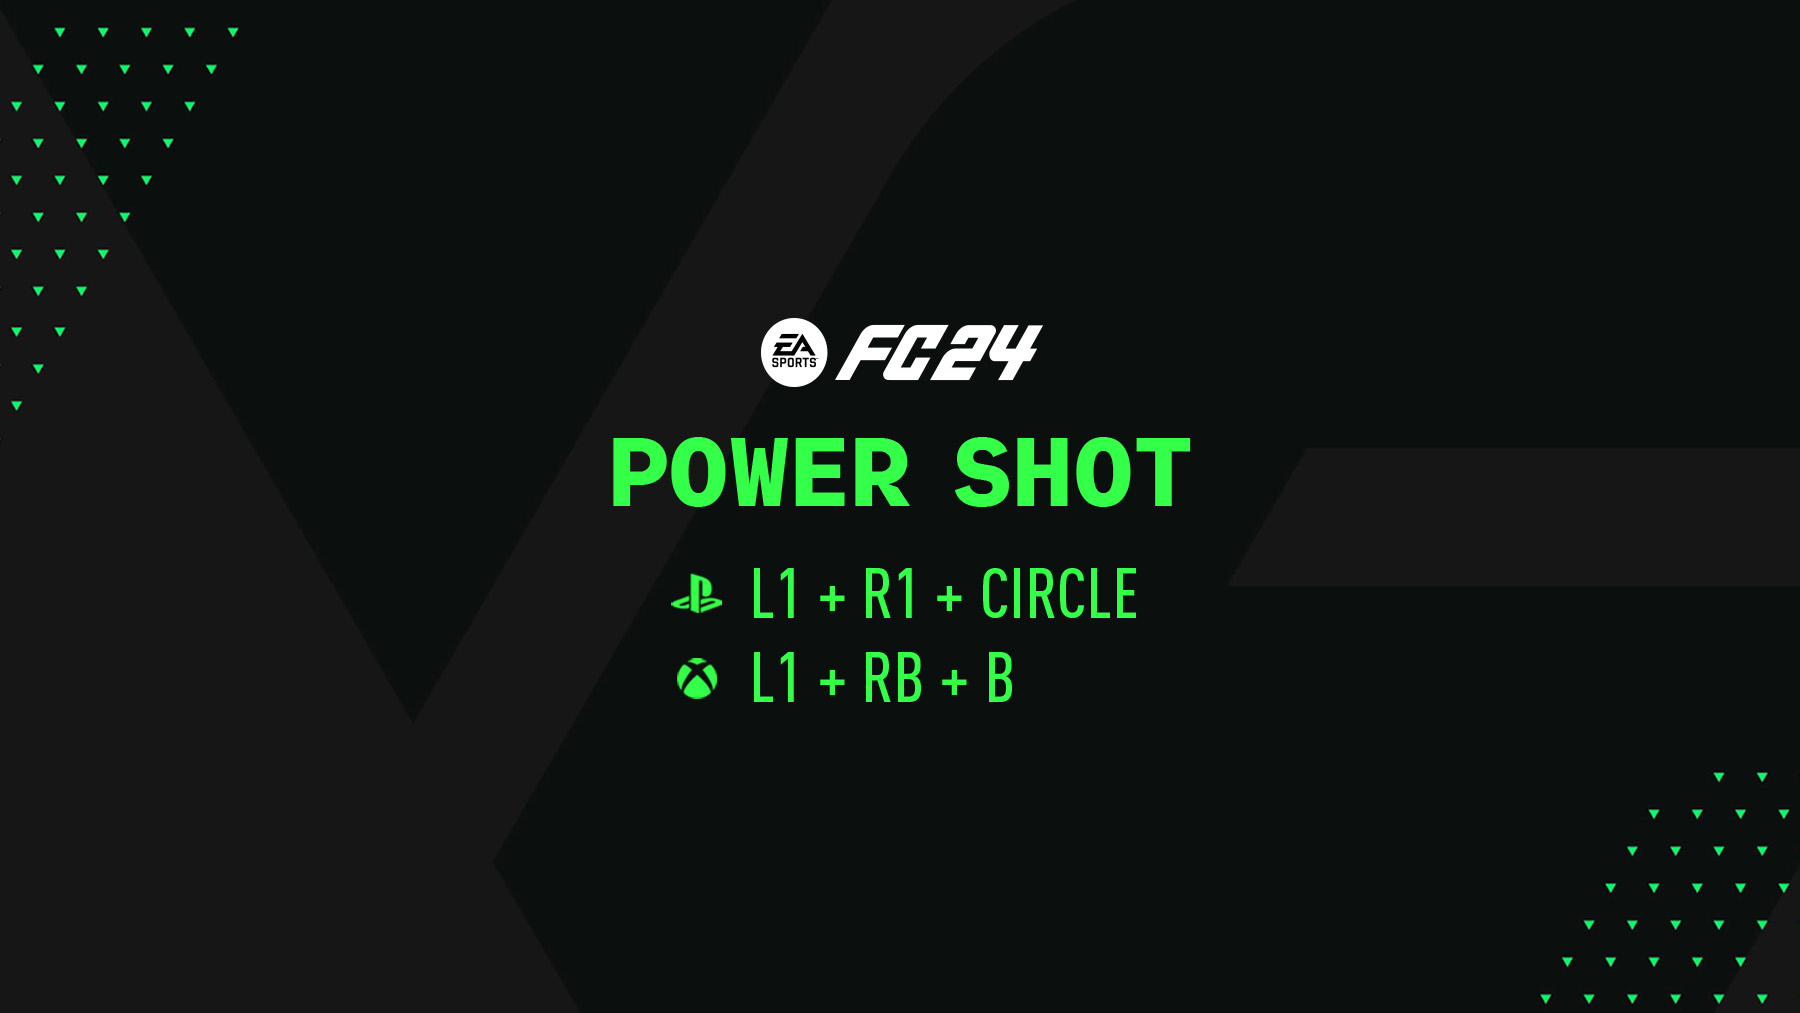 FC 24 Power Shot